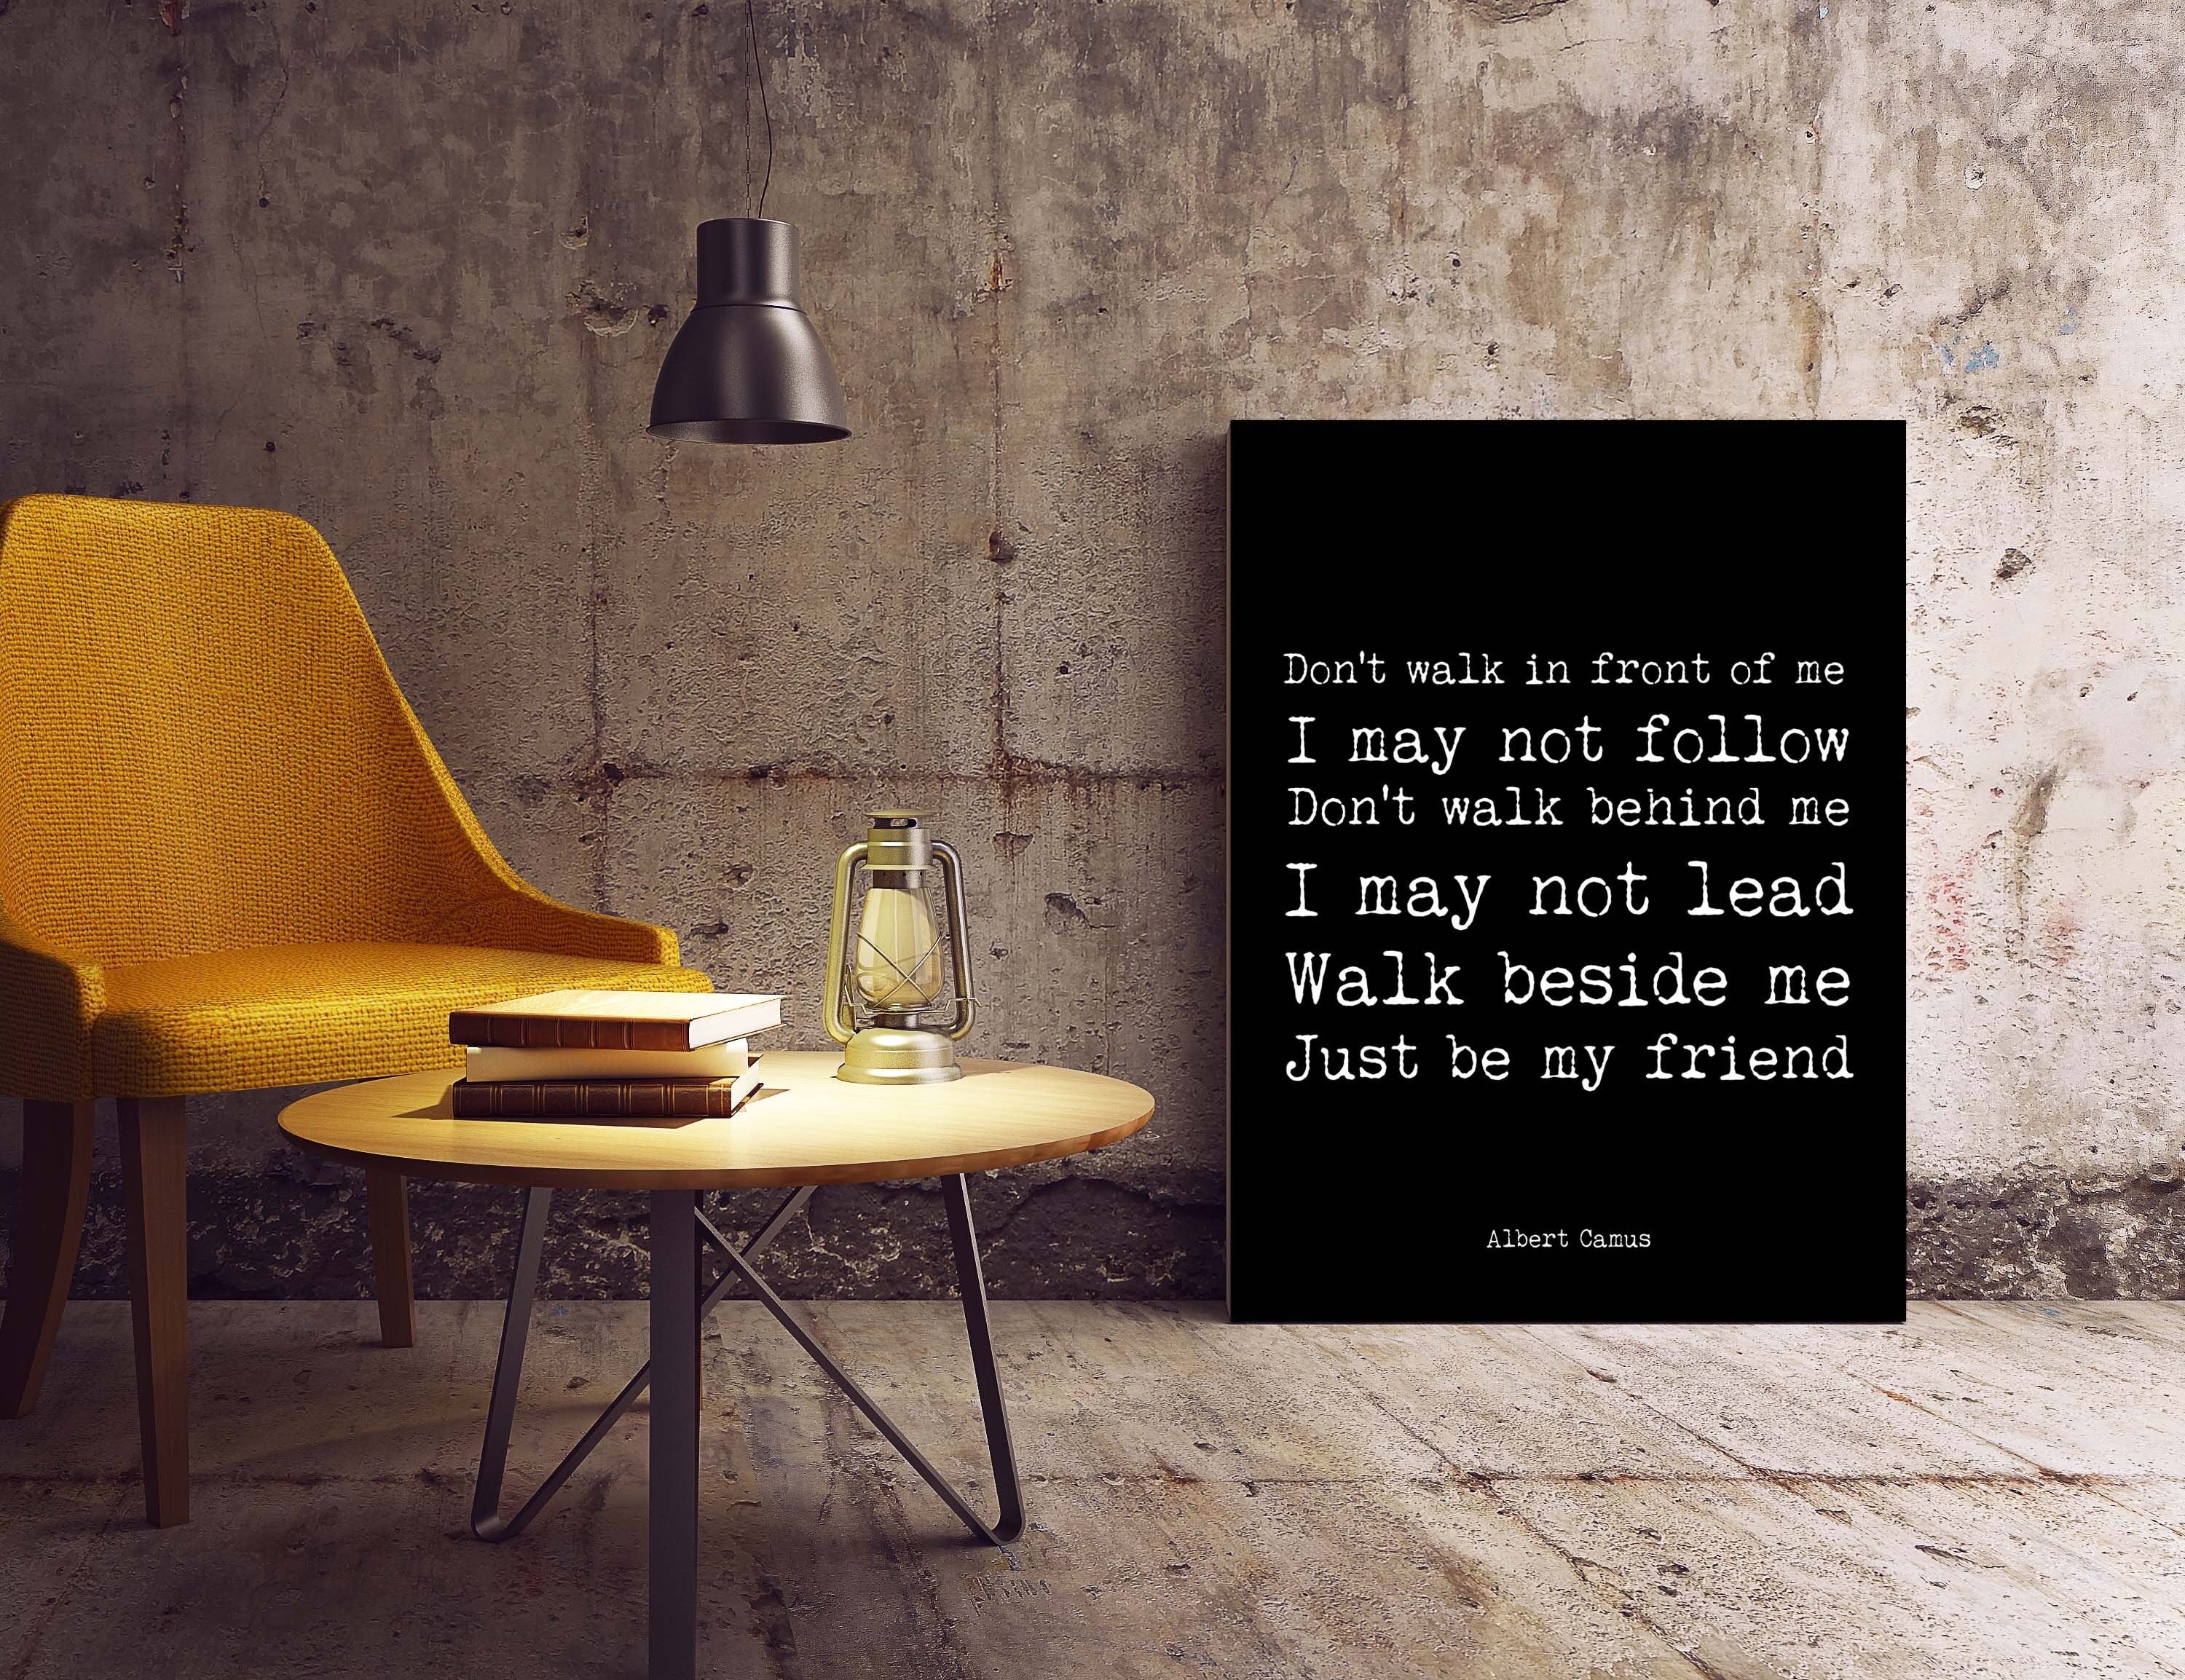 Albert Camus Quote Print - Walk Beside Me Just Be My Friend Wall Art Print, Inspirational Black and White Art Unframed